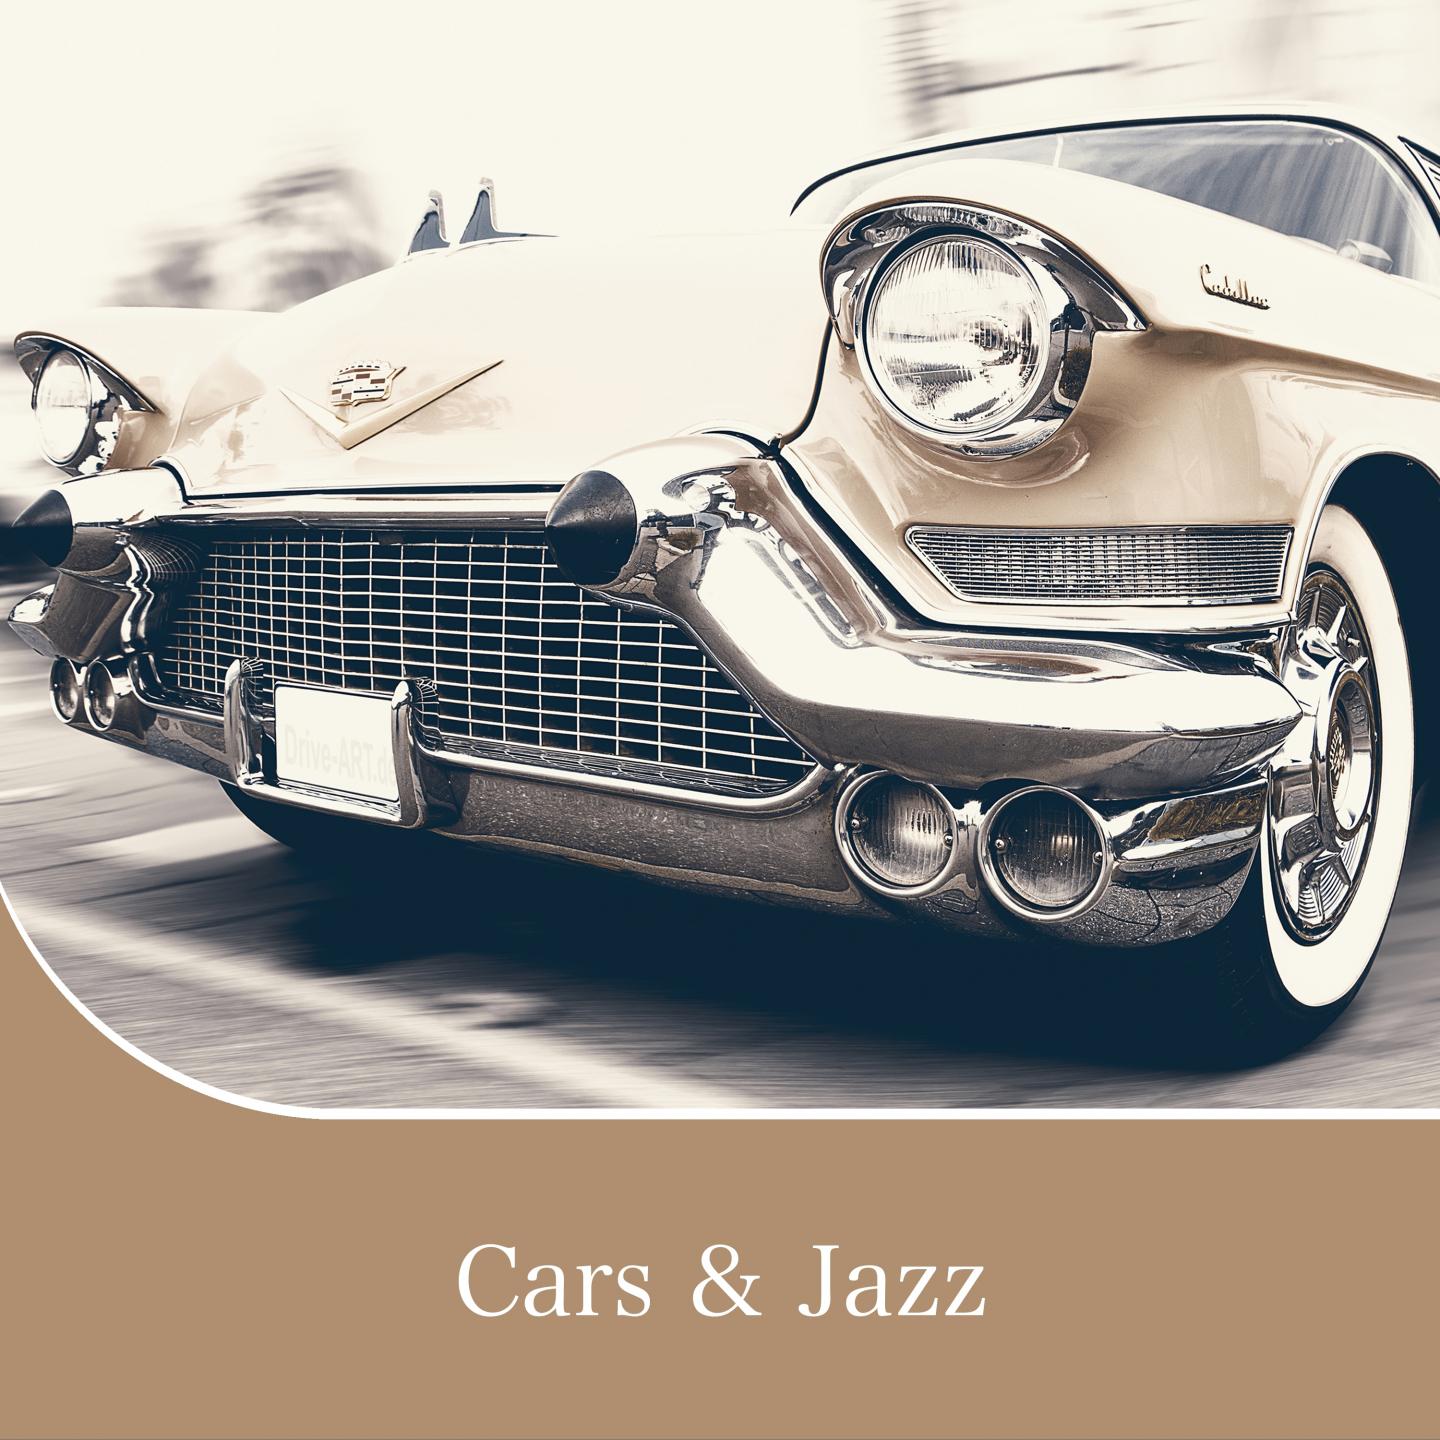 Cars & Jazz